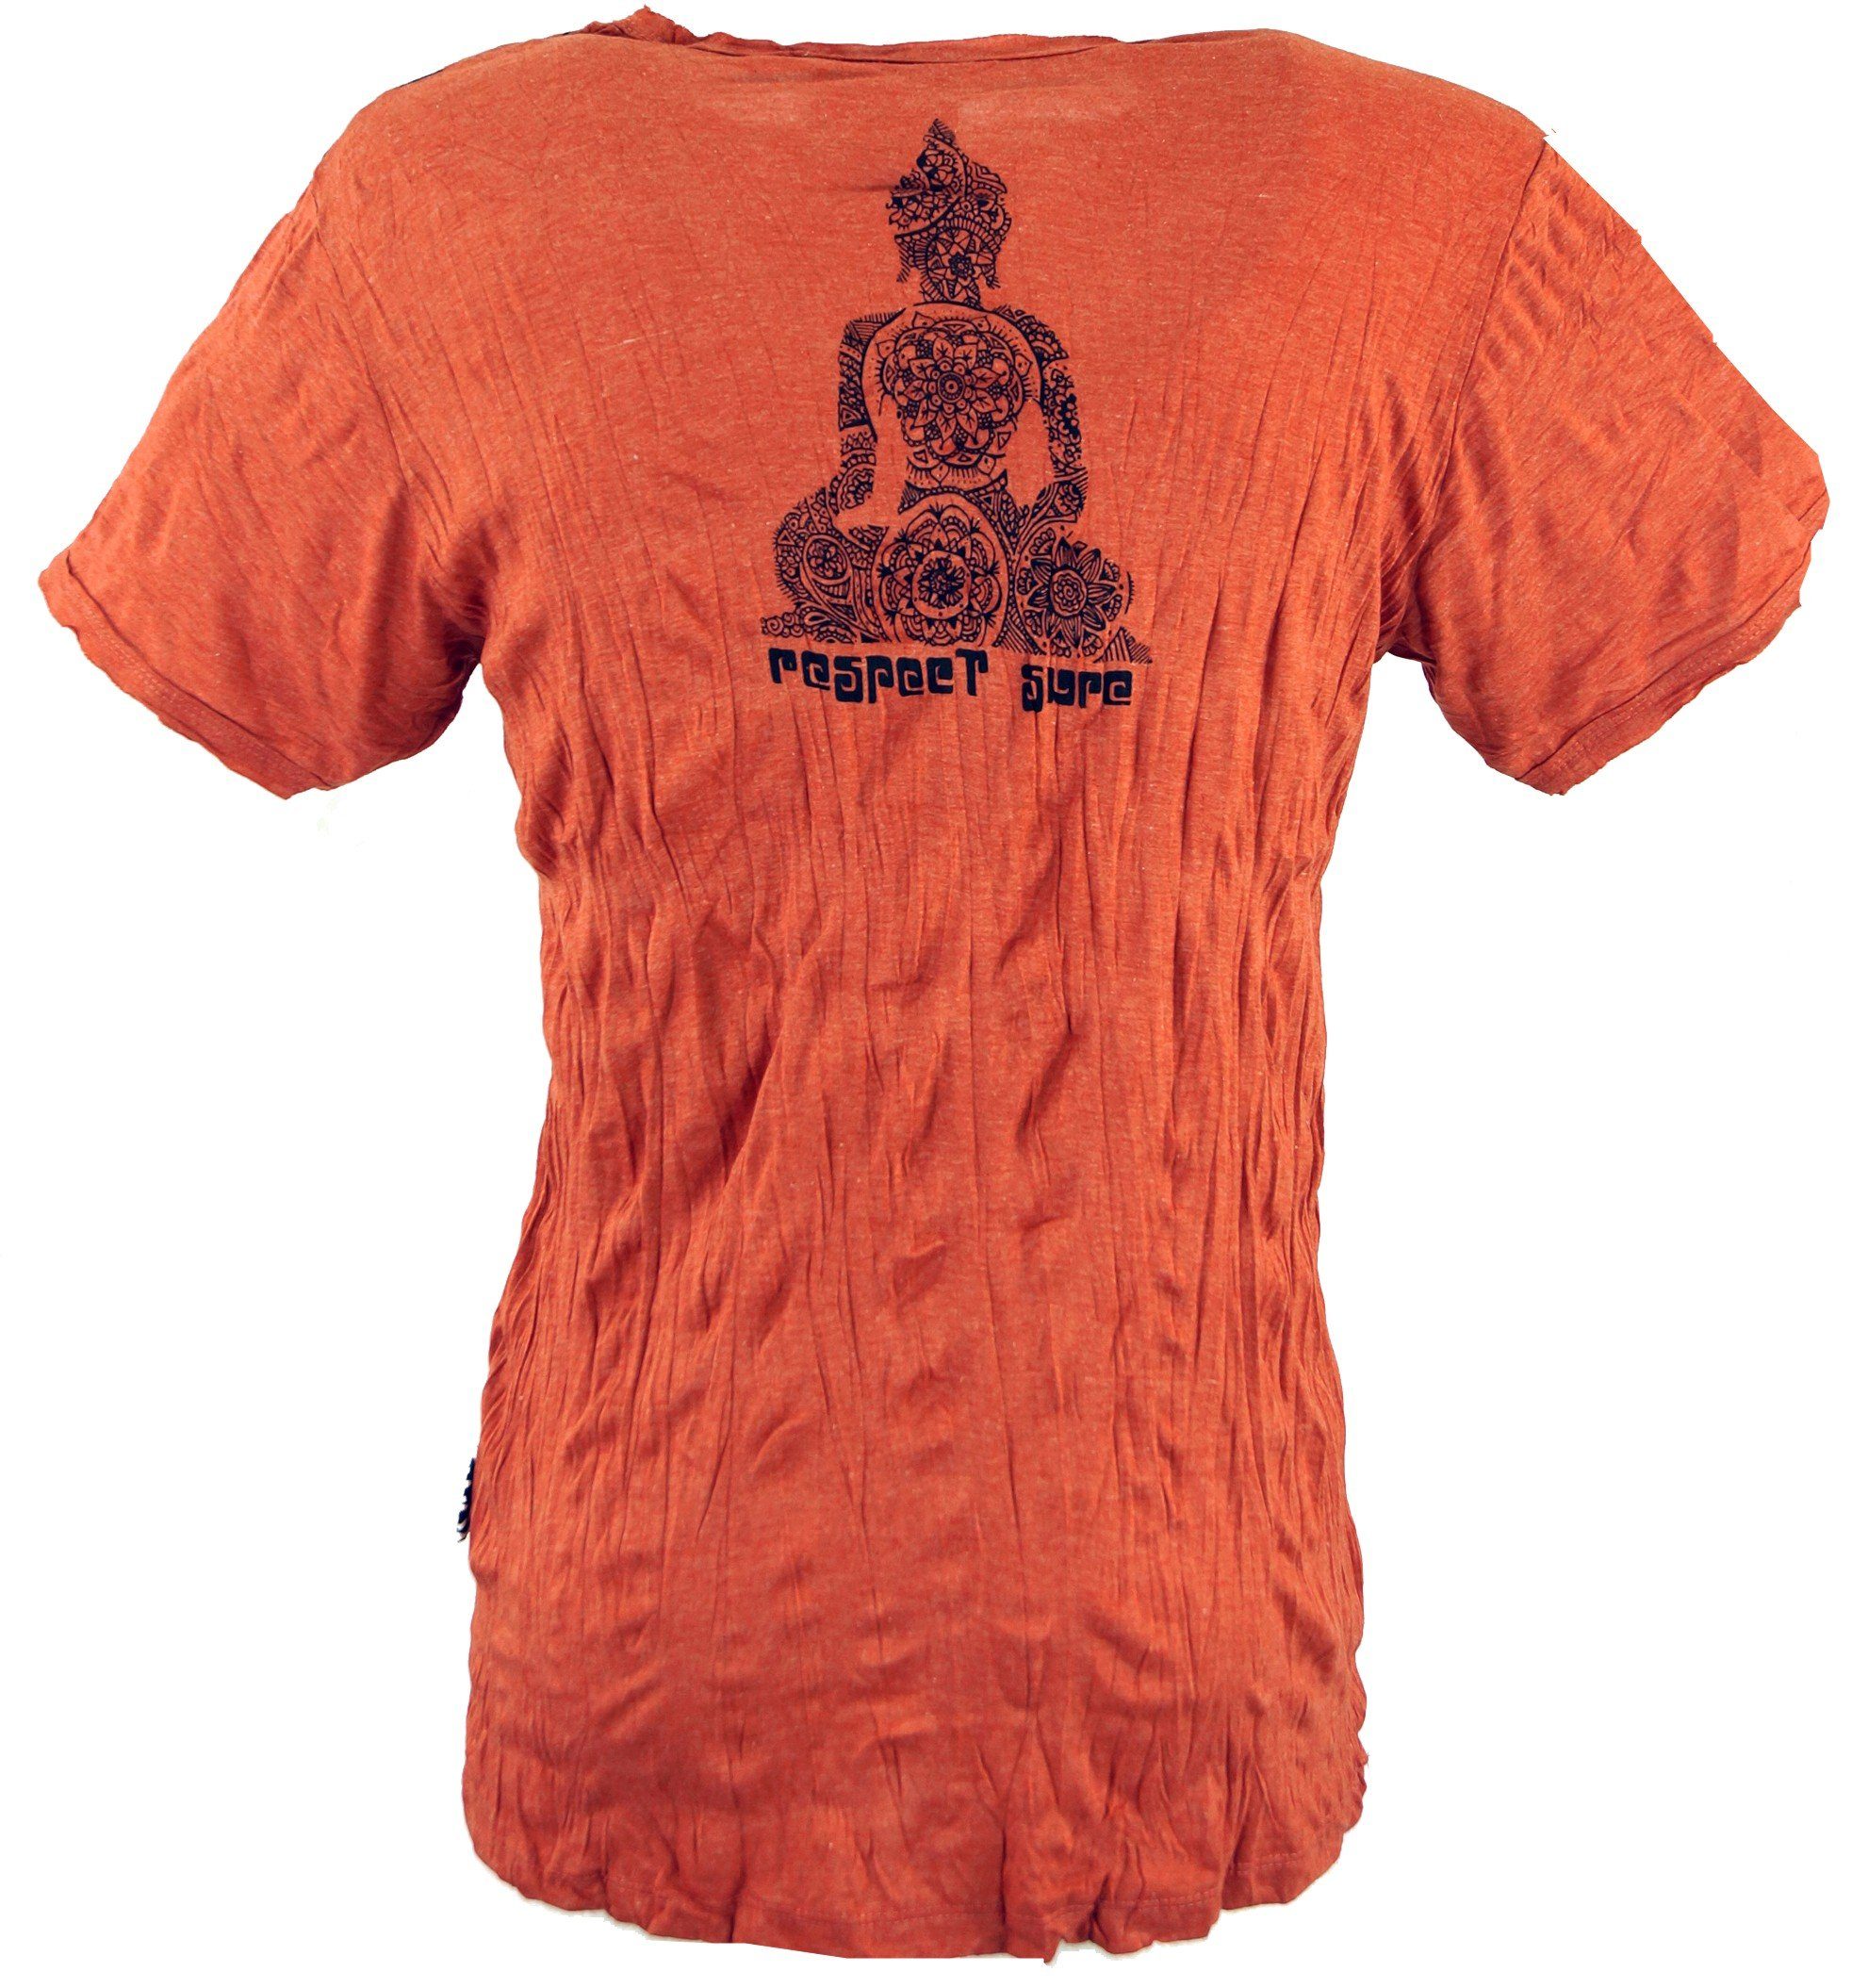 Guru-Shop T-Shirt Sure T-Shirt Mandala Buddha Style, rostorange alternative Goa Bekleidung Festival, 